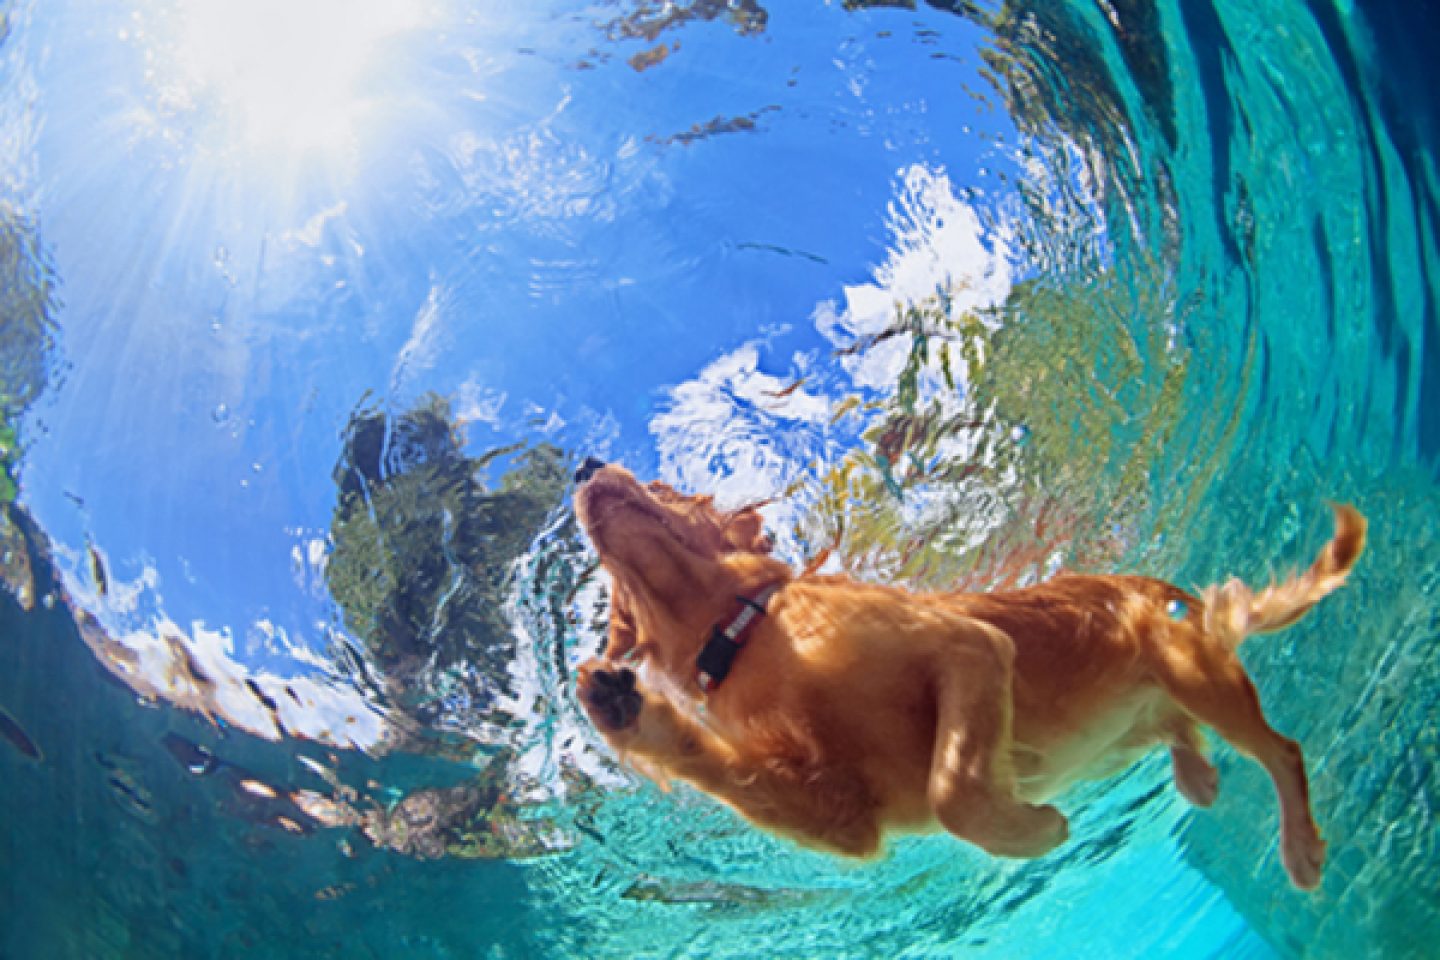 dog-in-pool